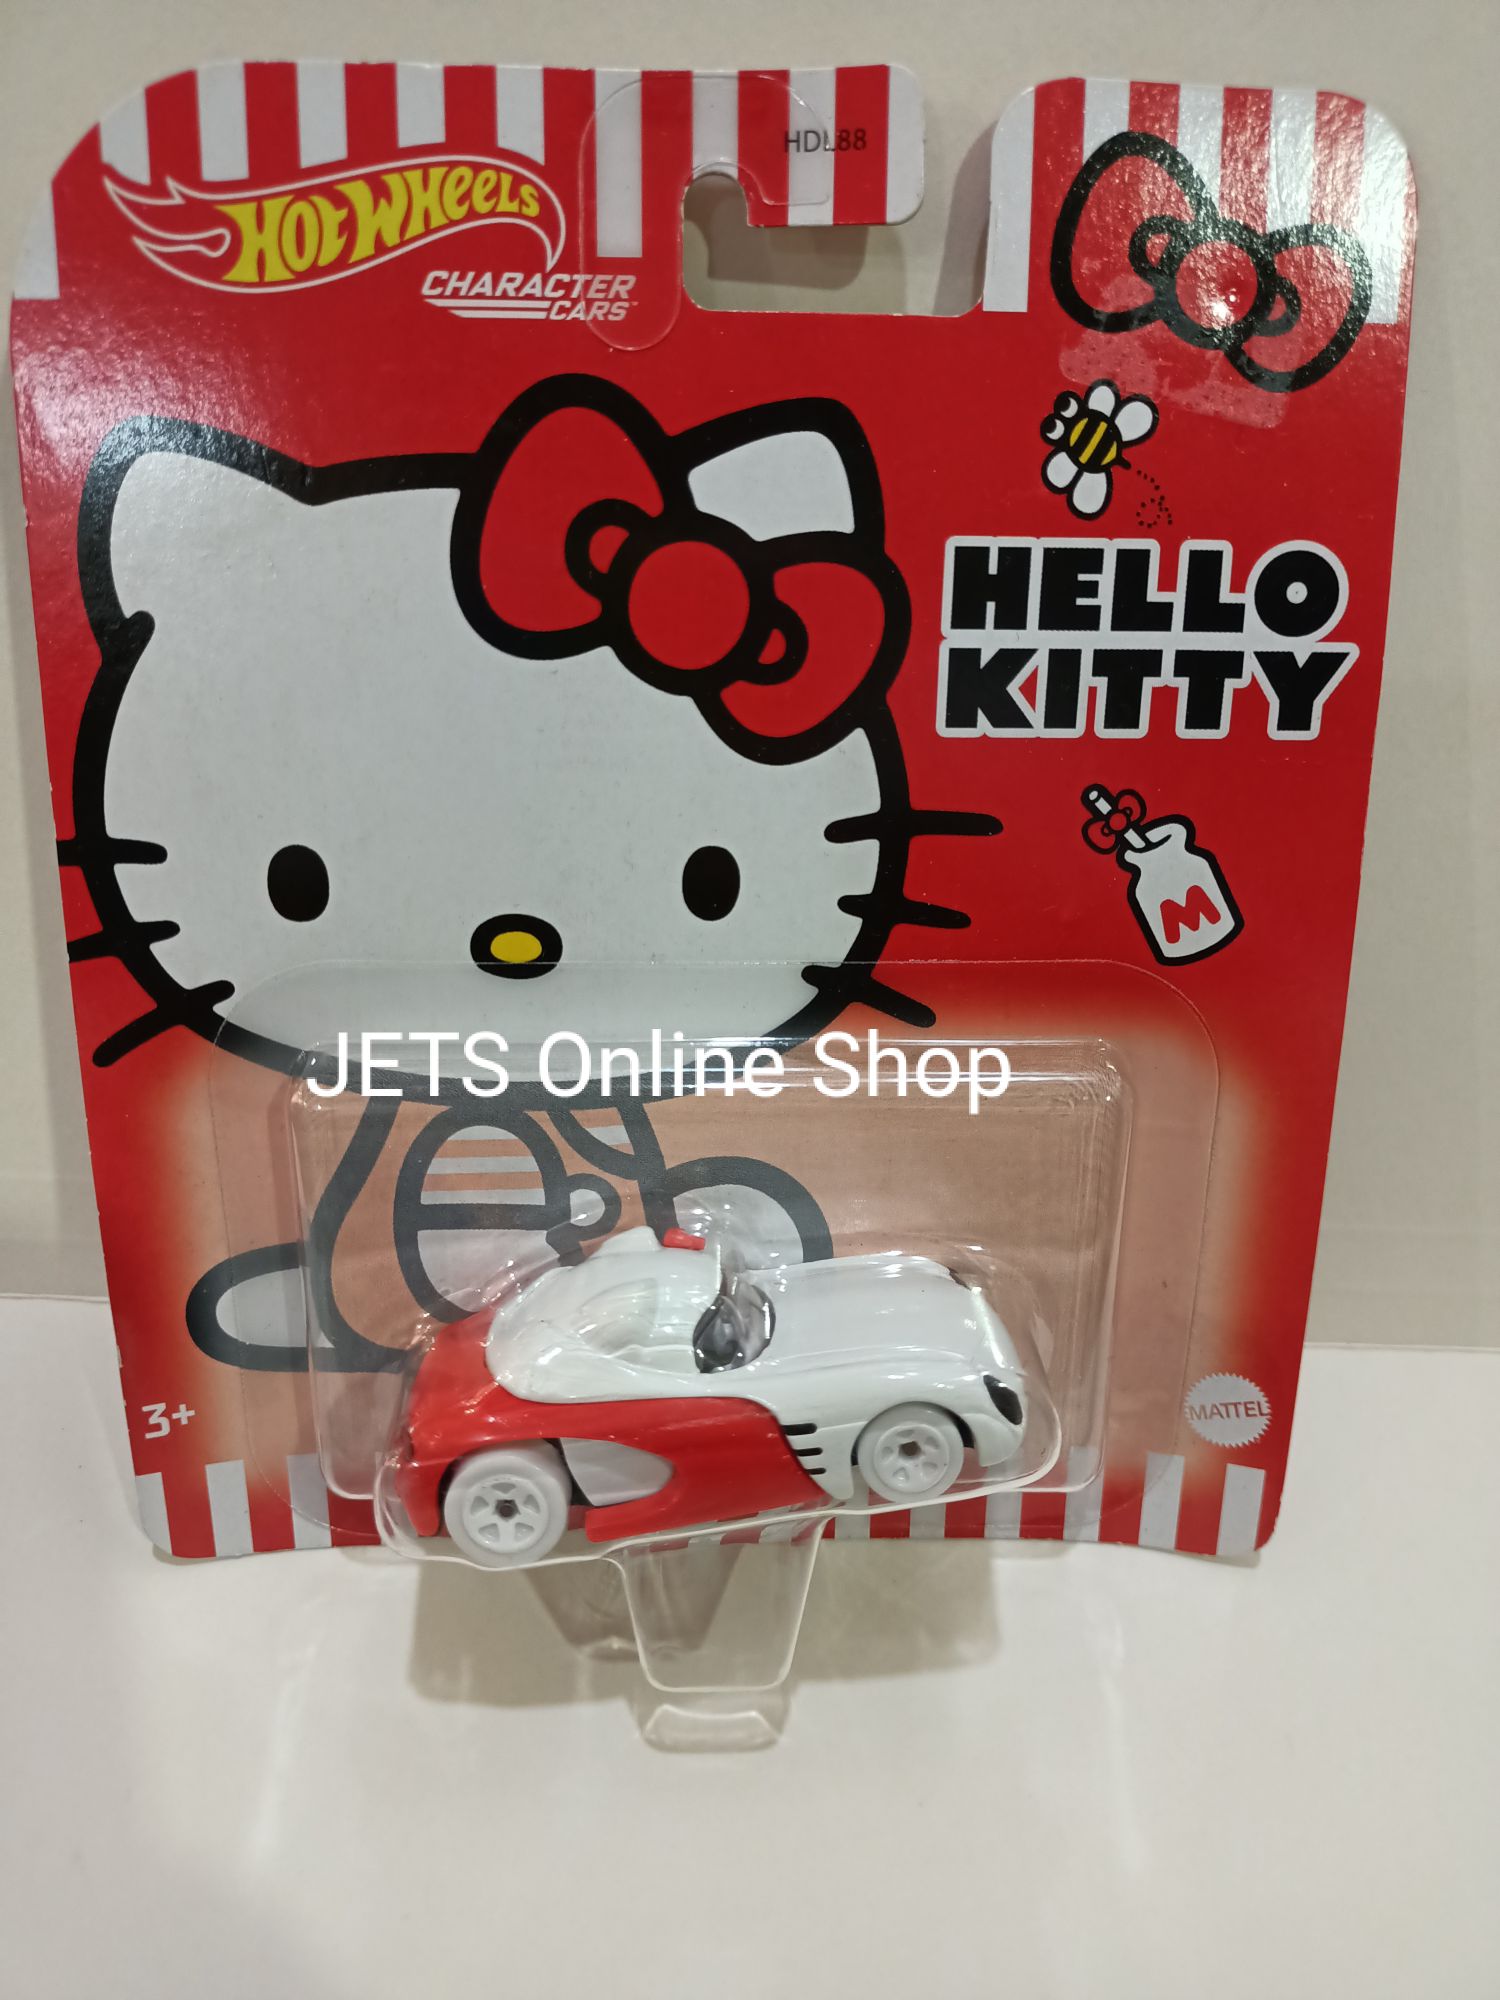 Sanrio Hot Wheels Character Cars Hello Kitty